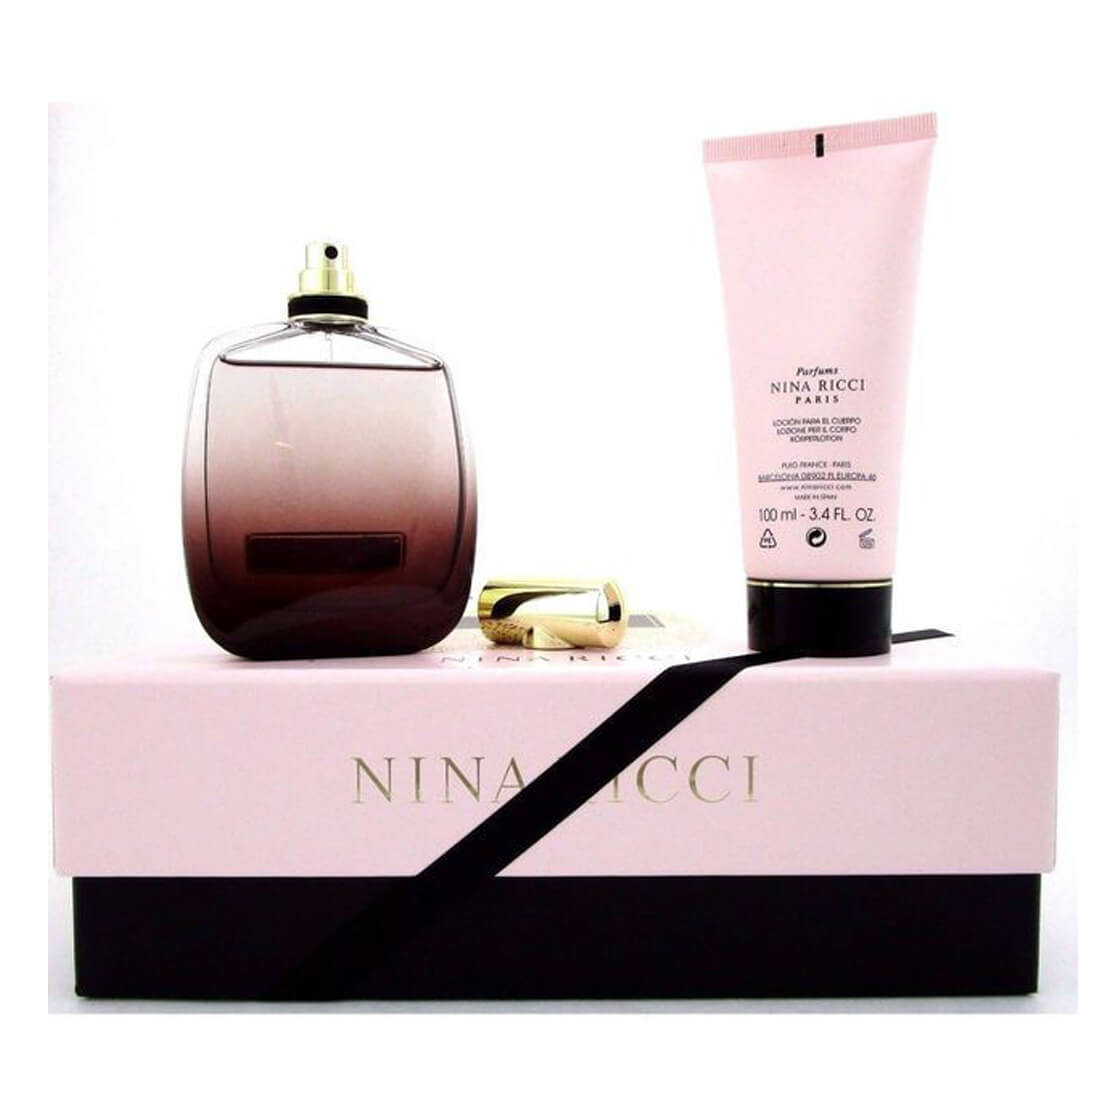 Nina Ricci L'extase Gift Set For Women